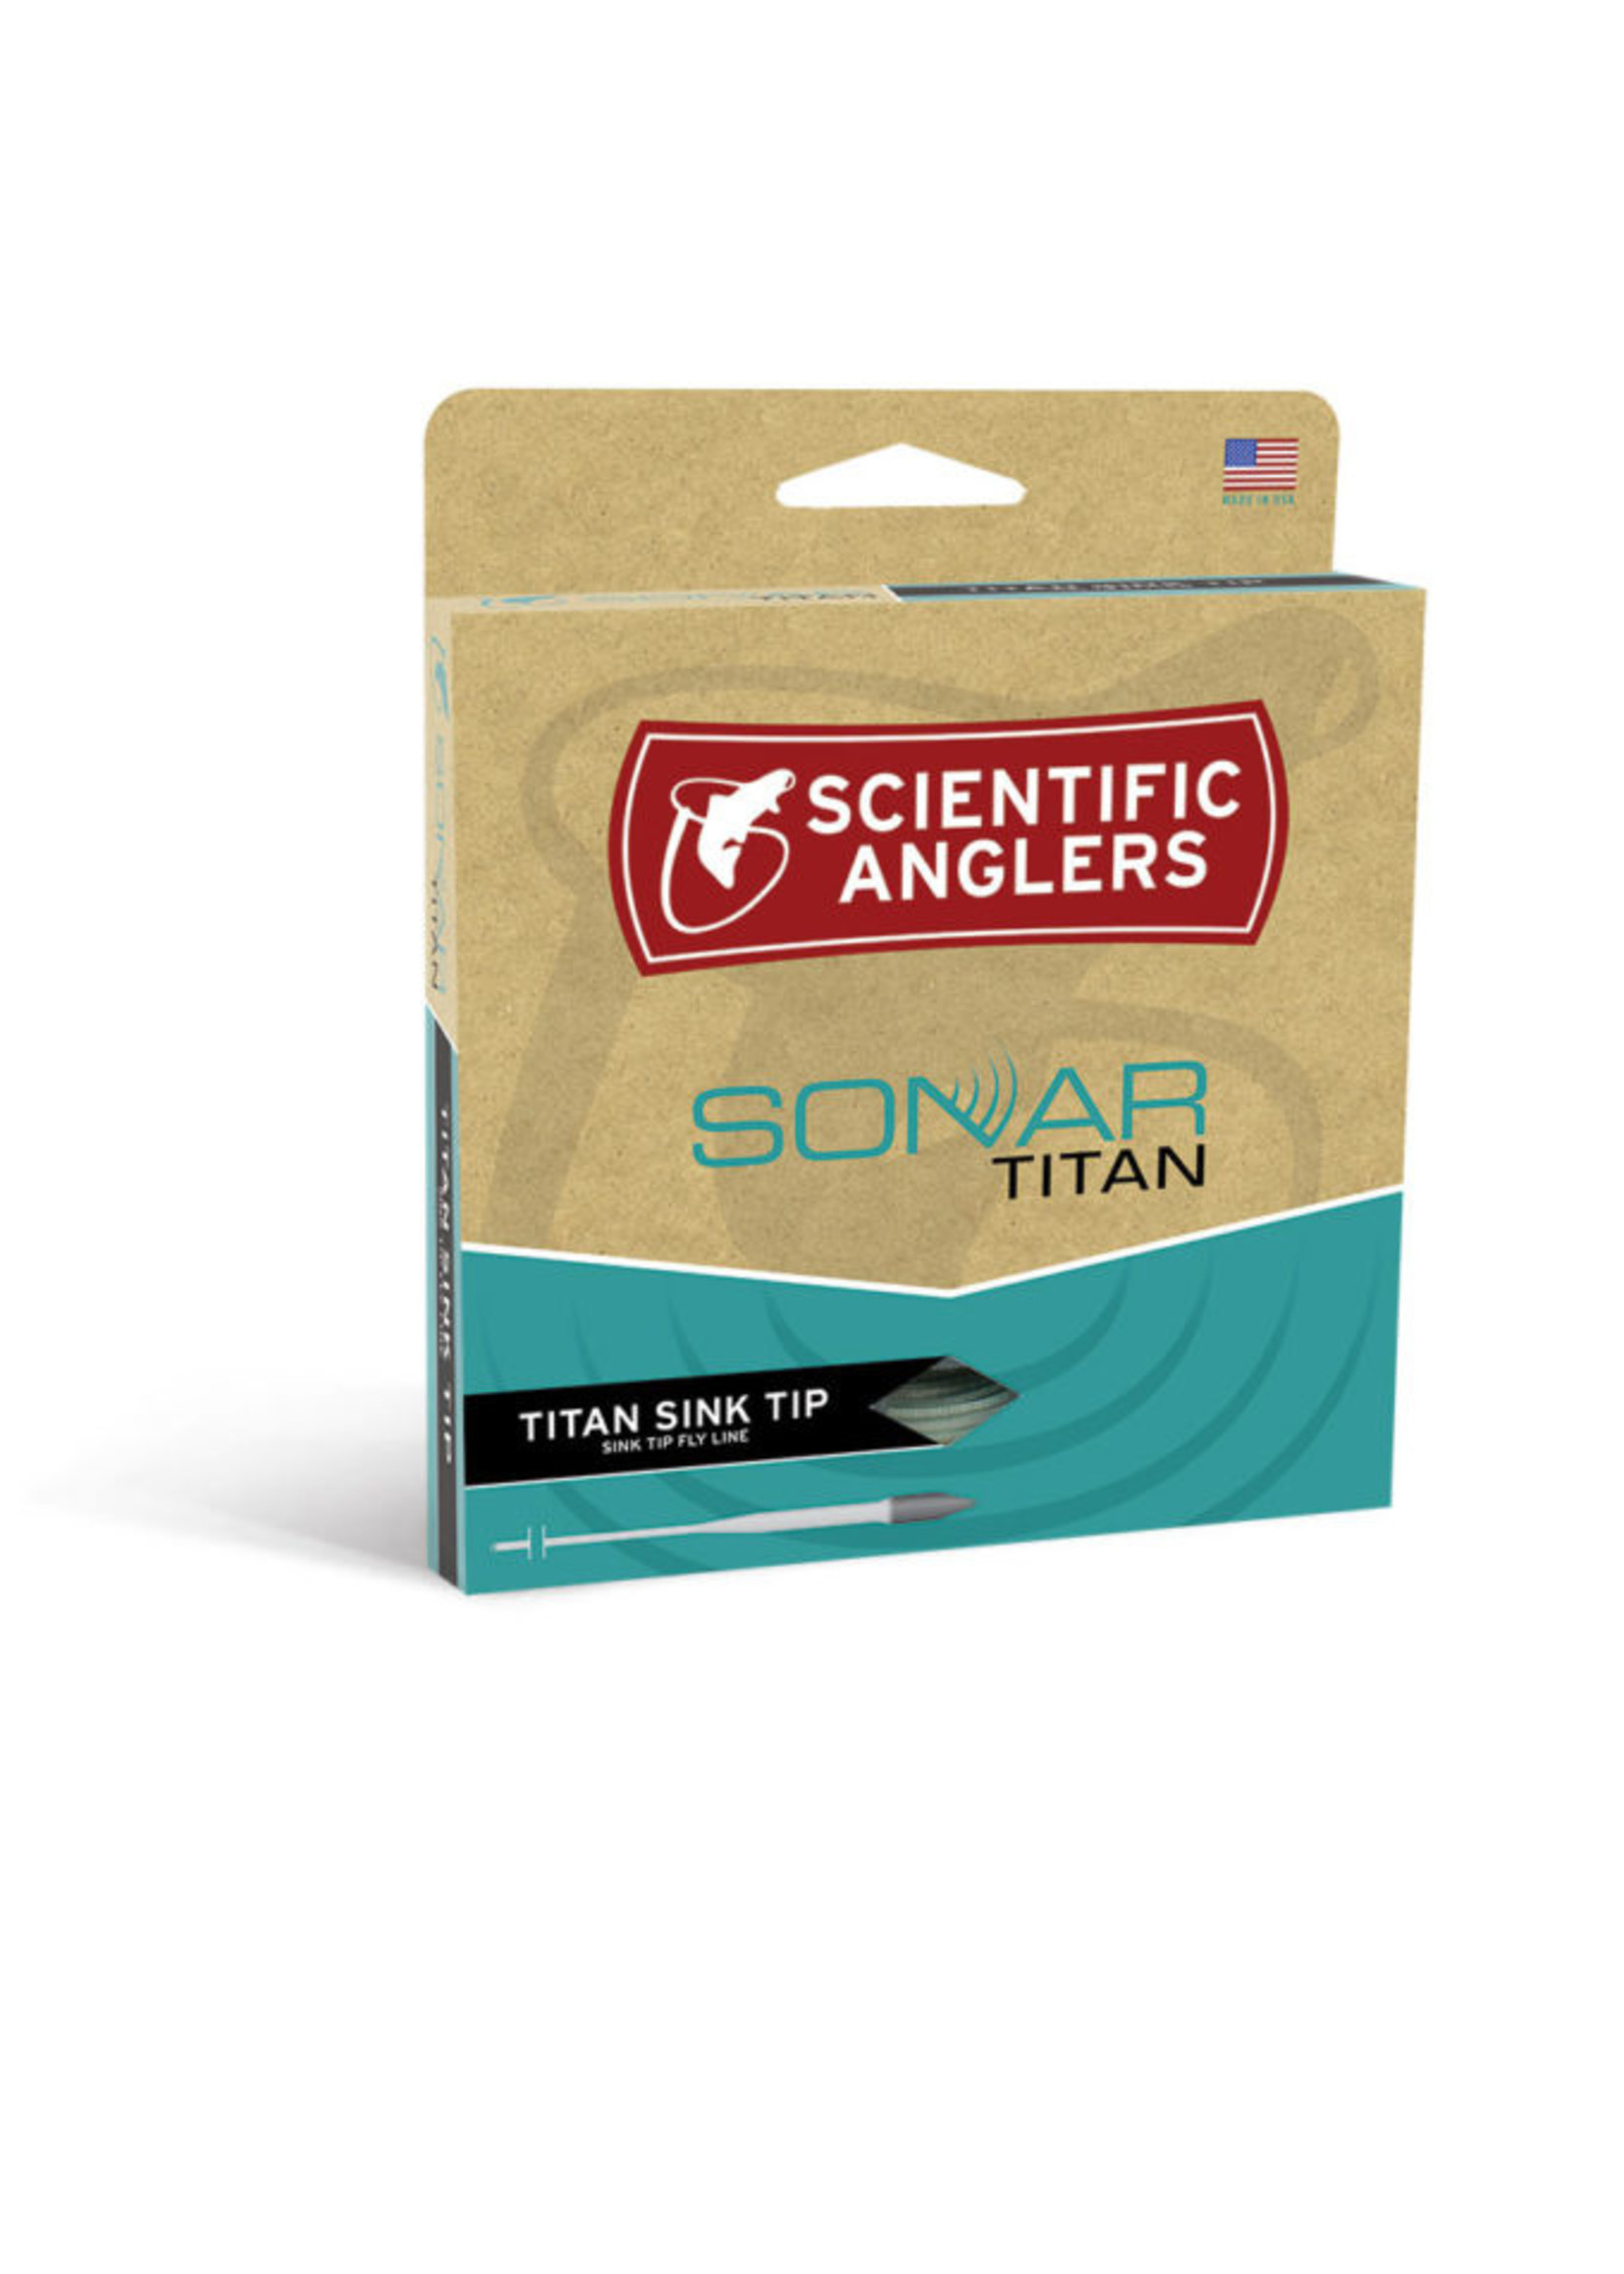 Scientific Anglers Scientific Anglers Sonar Titan Sink Tip Fly Line